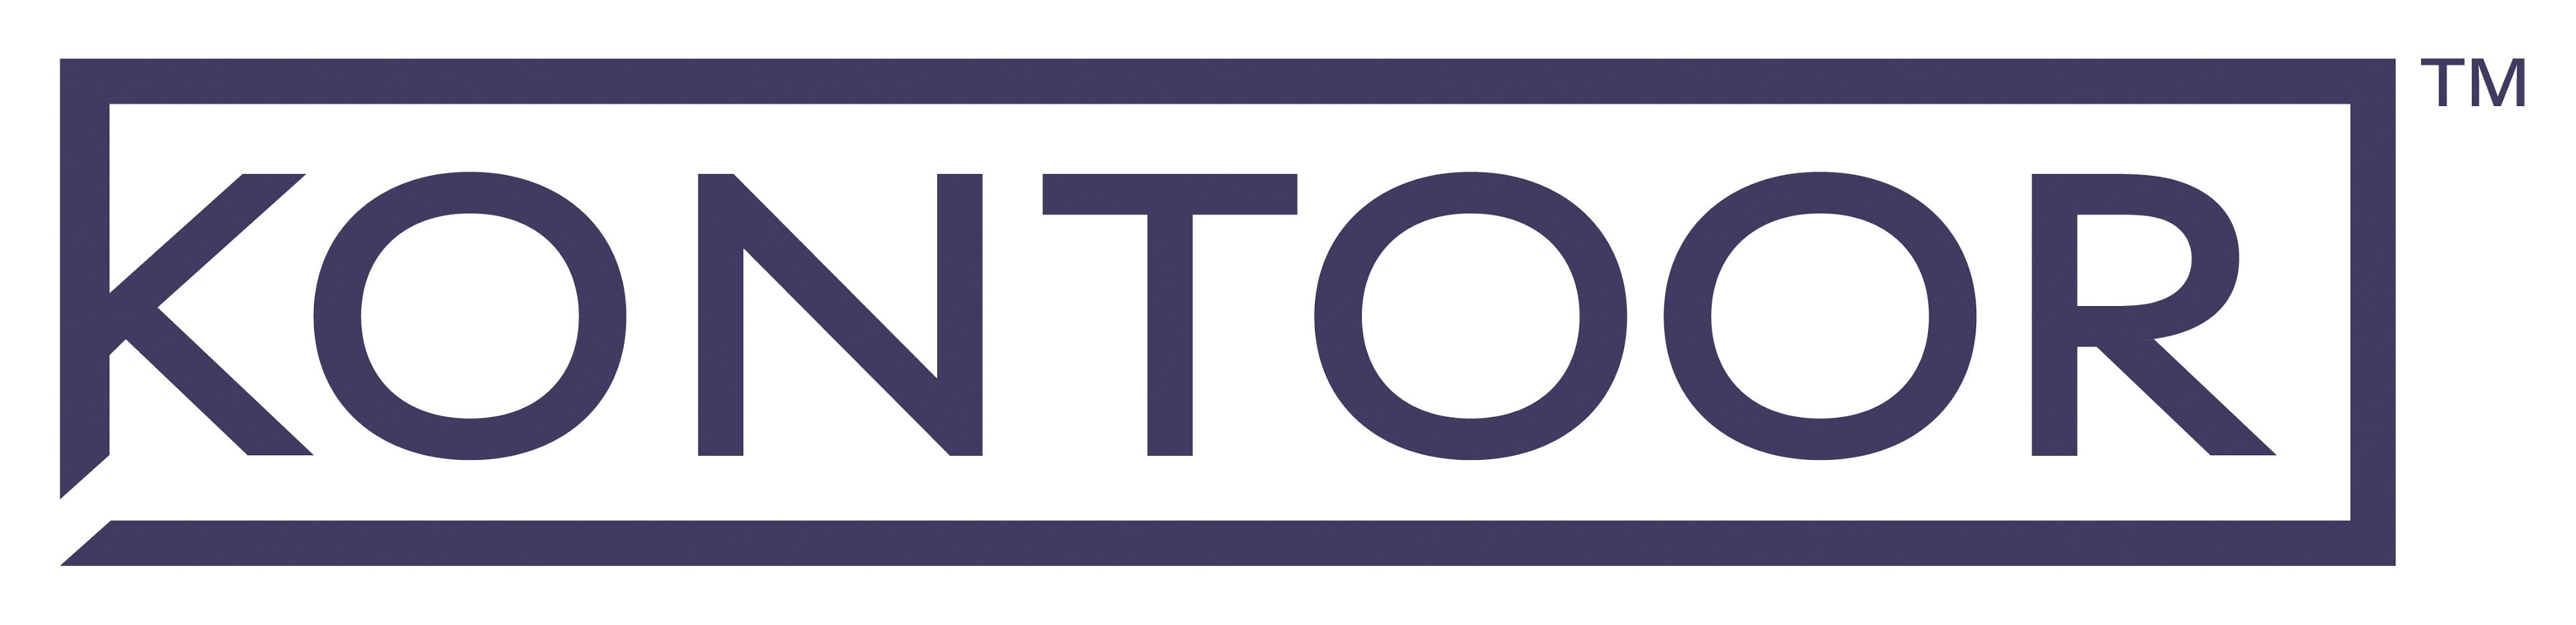 KTB Logo.jpg